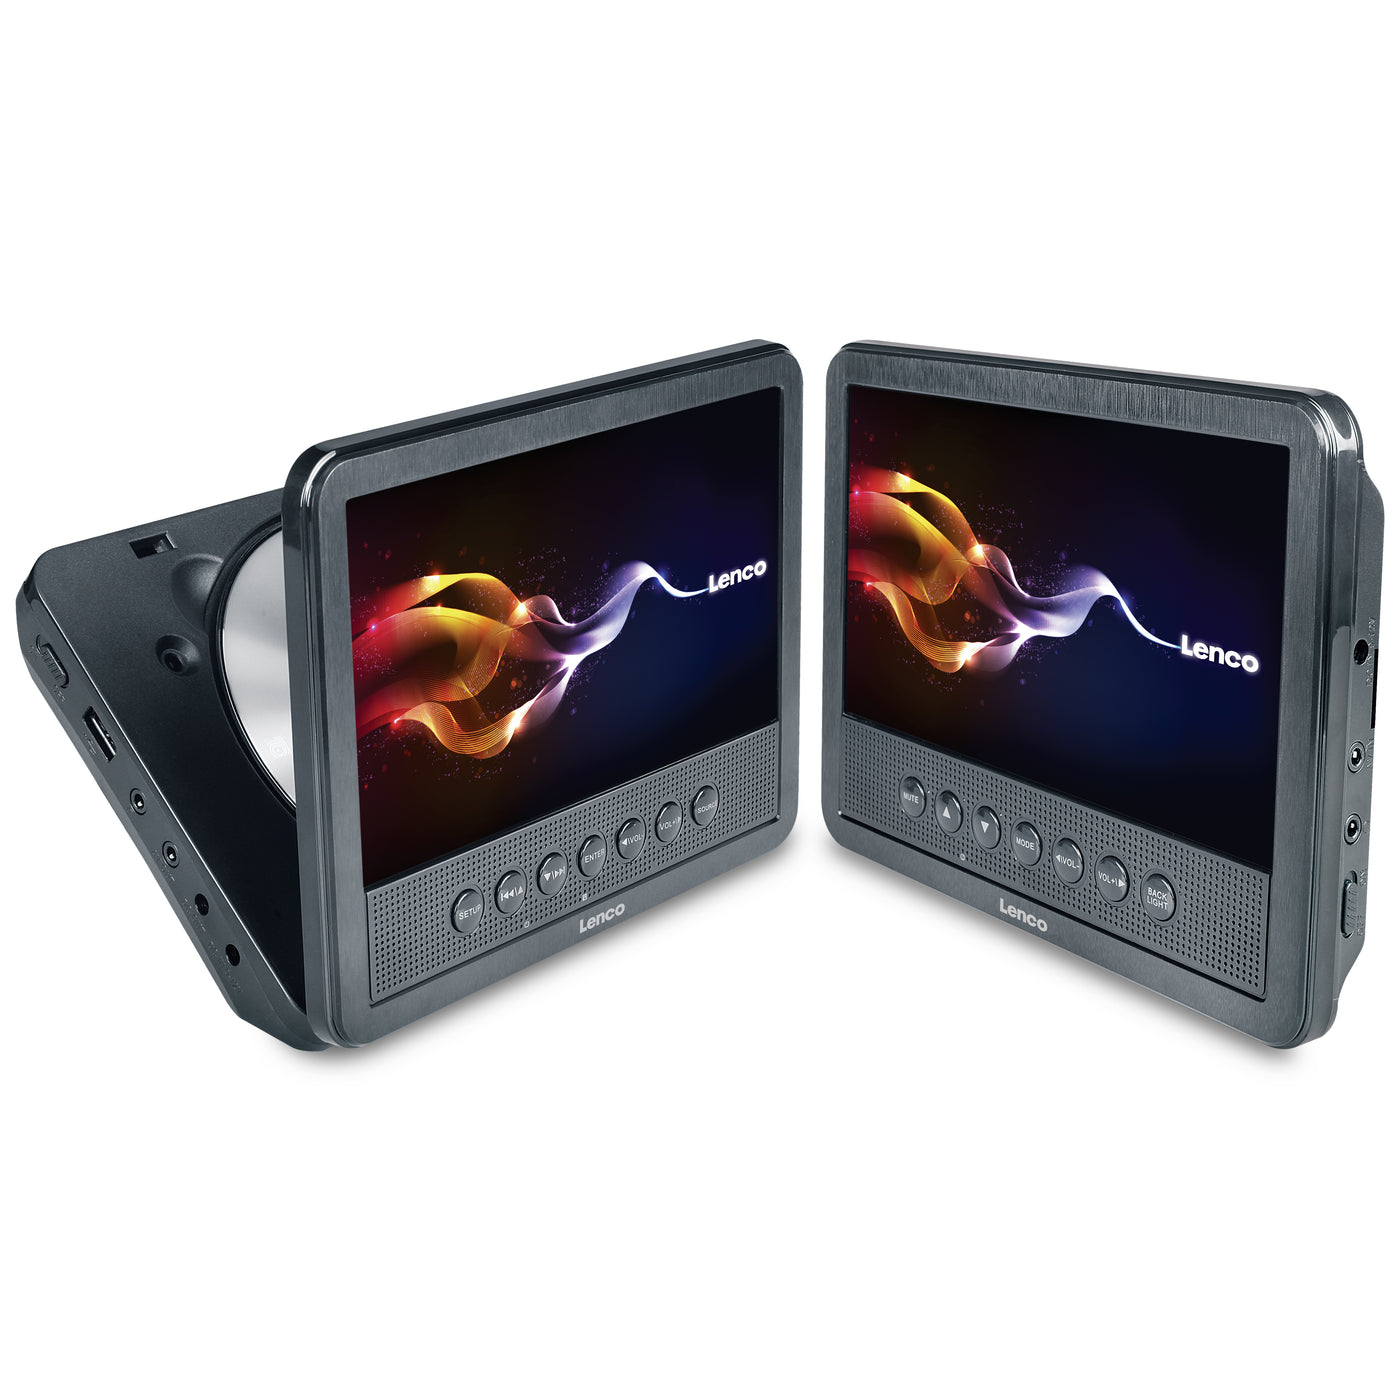 LENCO MES-212 - 7" Double display portable DVD player wth USB - Black